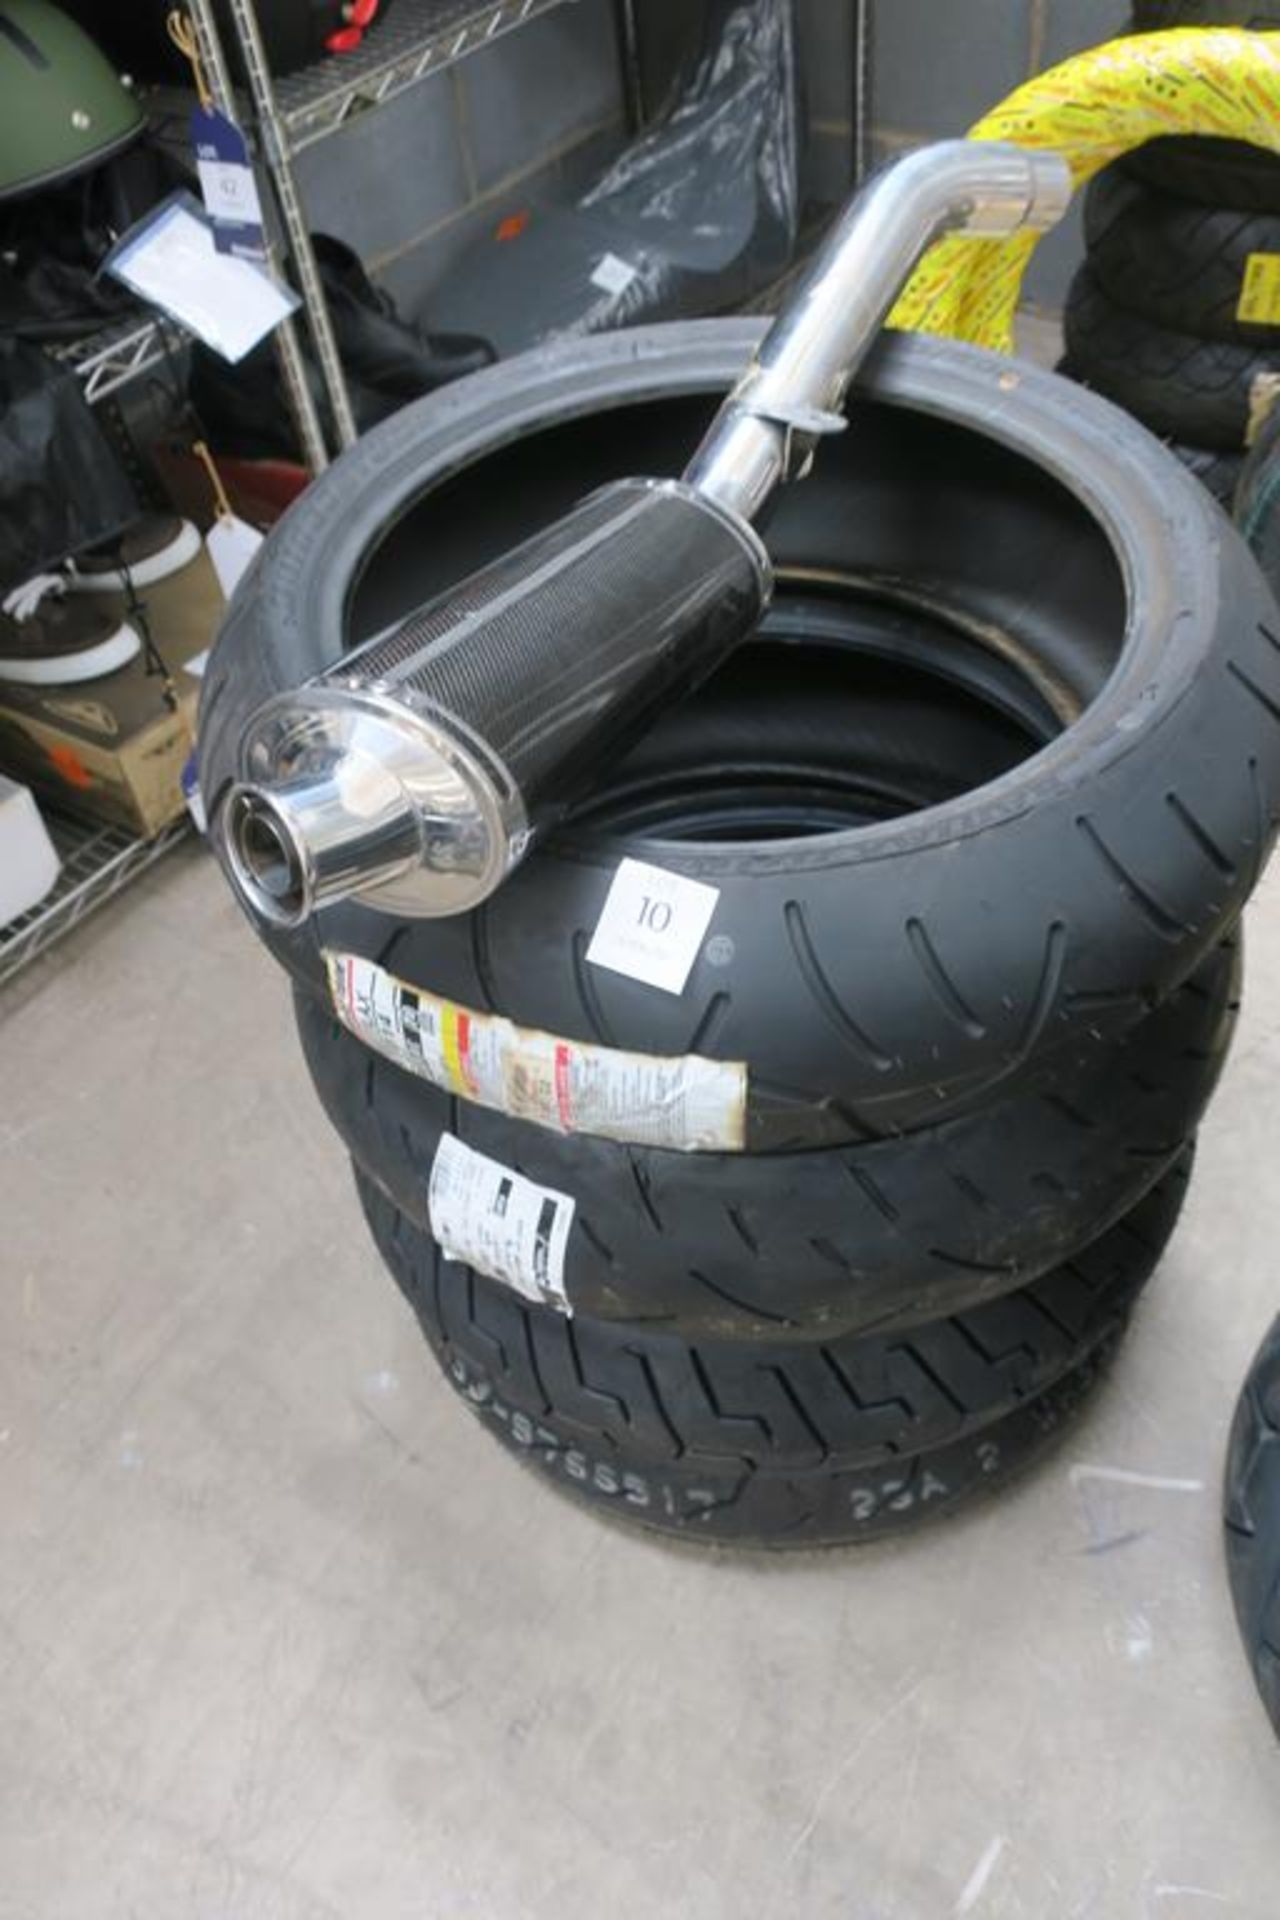 4 Motorbike Tyres (200/50ZR17M/C, 180/55ZR17, 160/70B17, 150/60ZR17M/C) and BOS Performance Carbon F